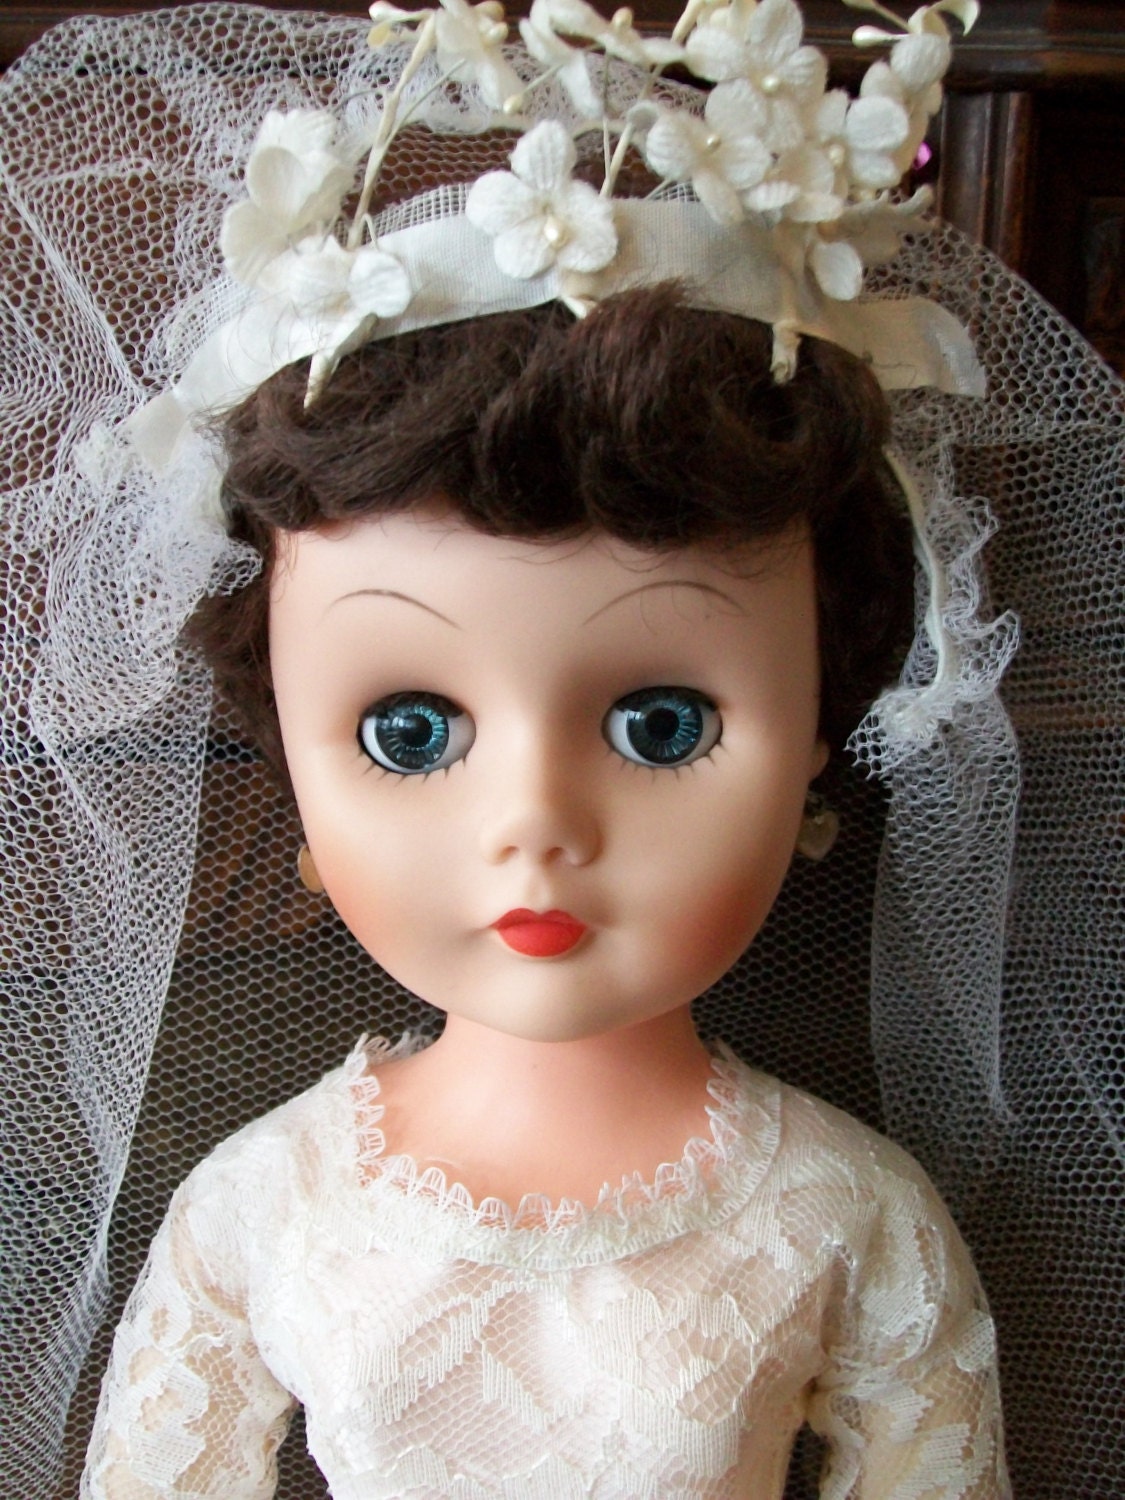 Beautiful Vintage Bonnie Bride Doll by Allied 1960's | Etsy